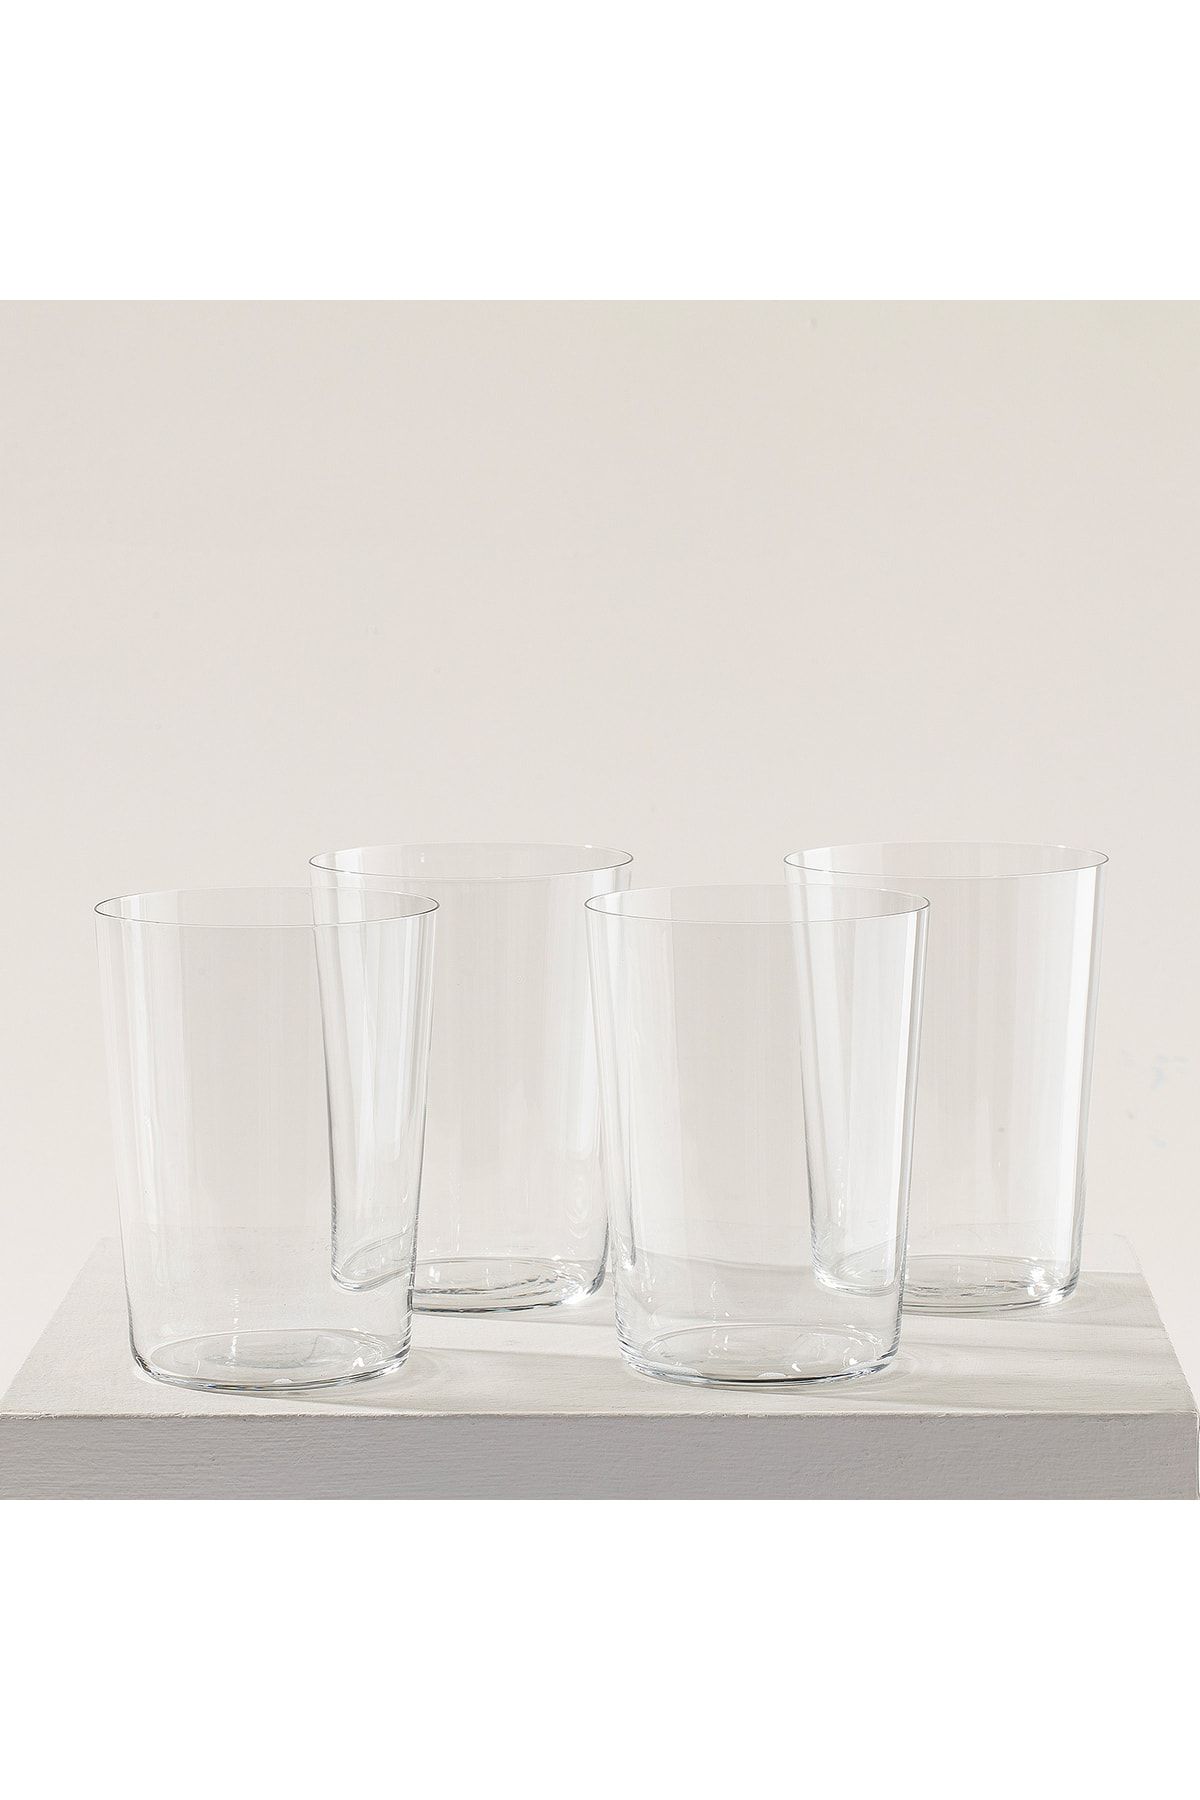 Chakra Elysee Su Bardağı 500 Ml 4''lü Set Standart